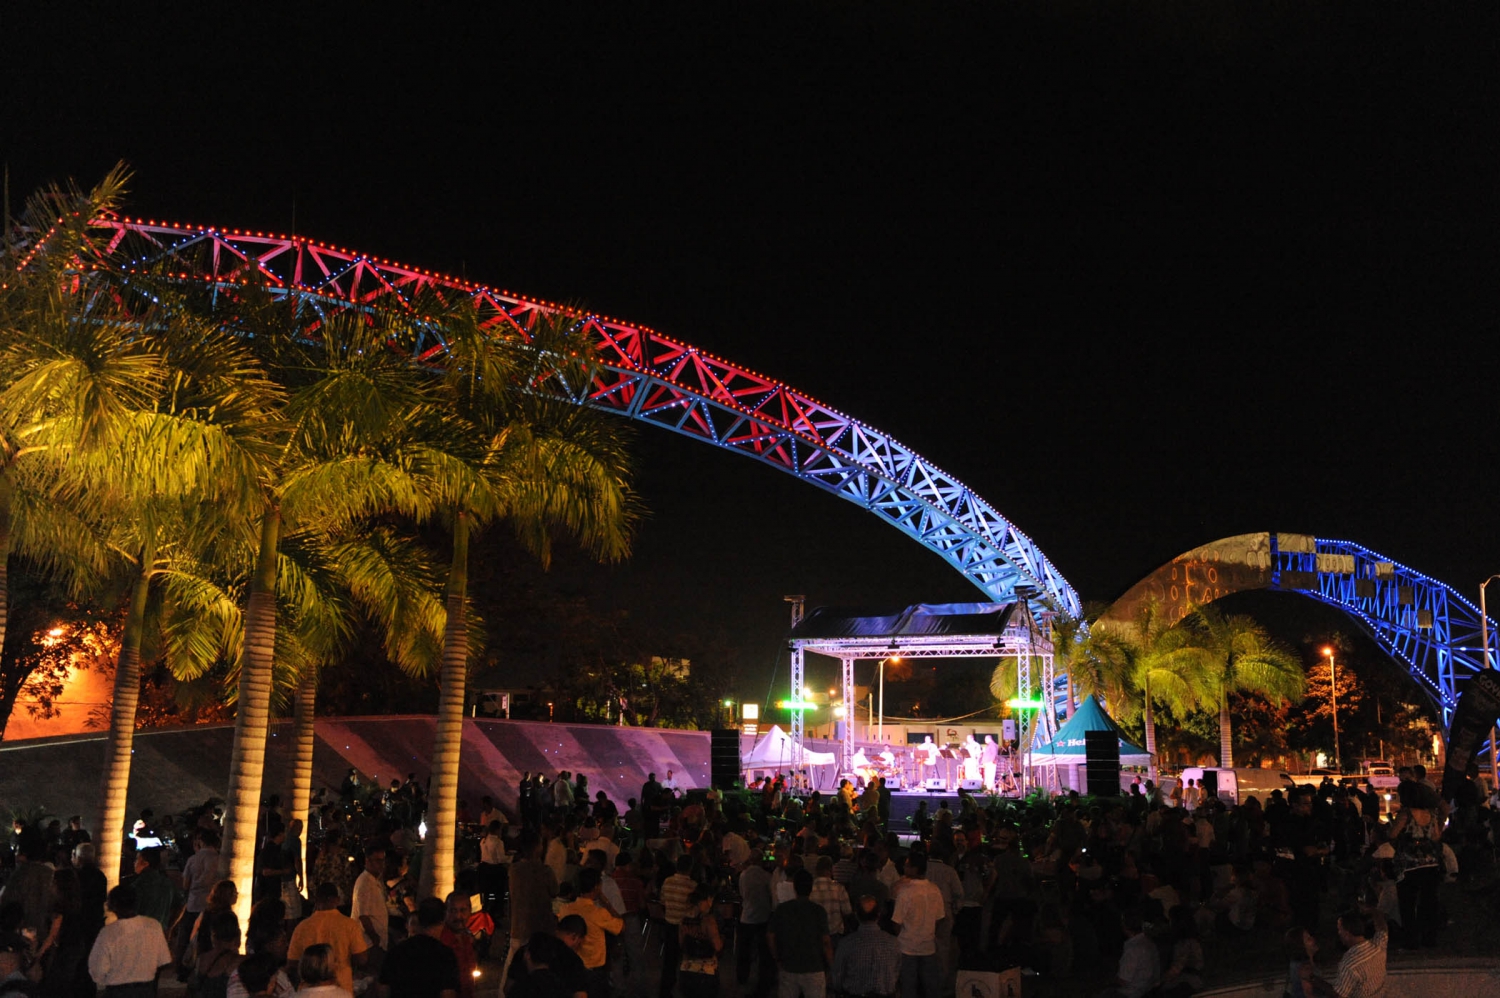 estrella del norte, live music activities in metro San Juan